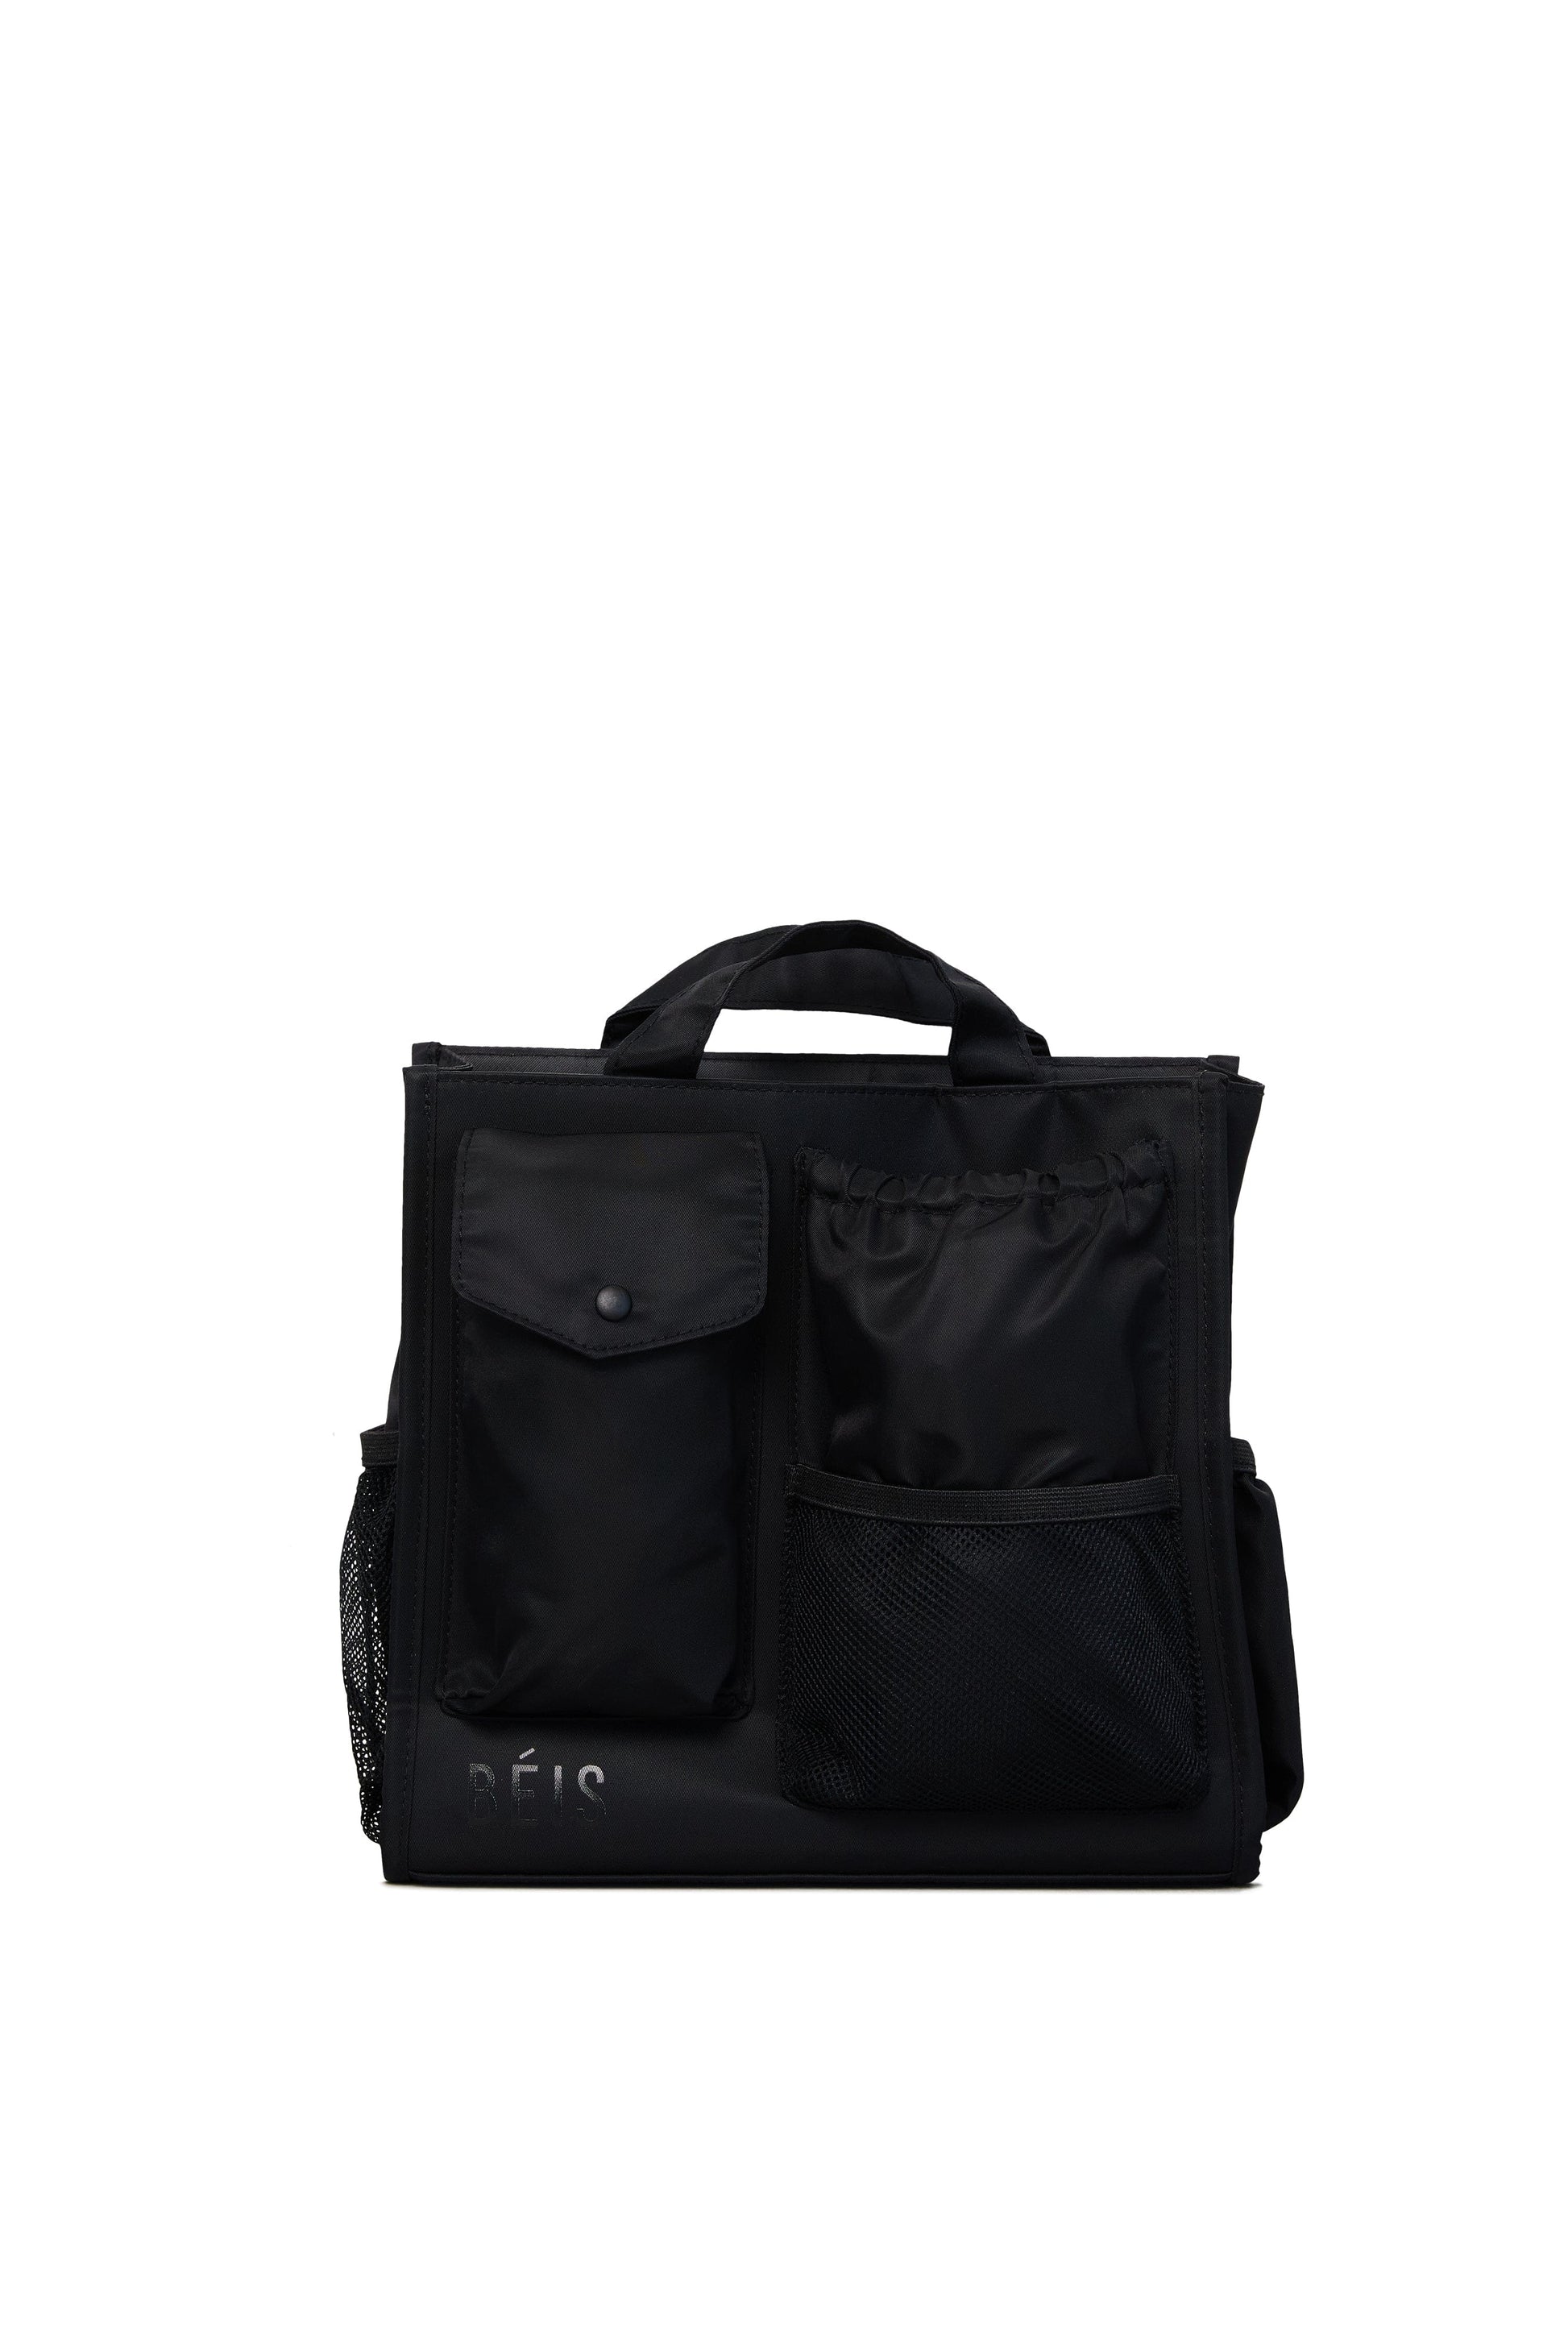 Tote Bag Organizer Insert Accessory for the meori Office Tote Bag